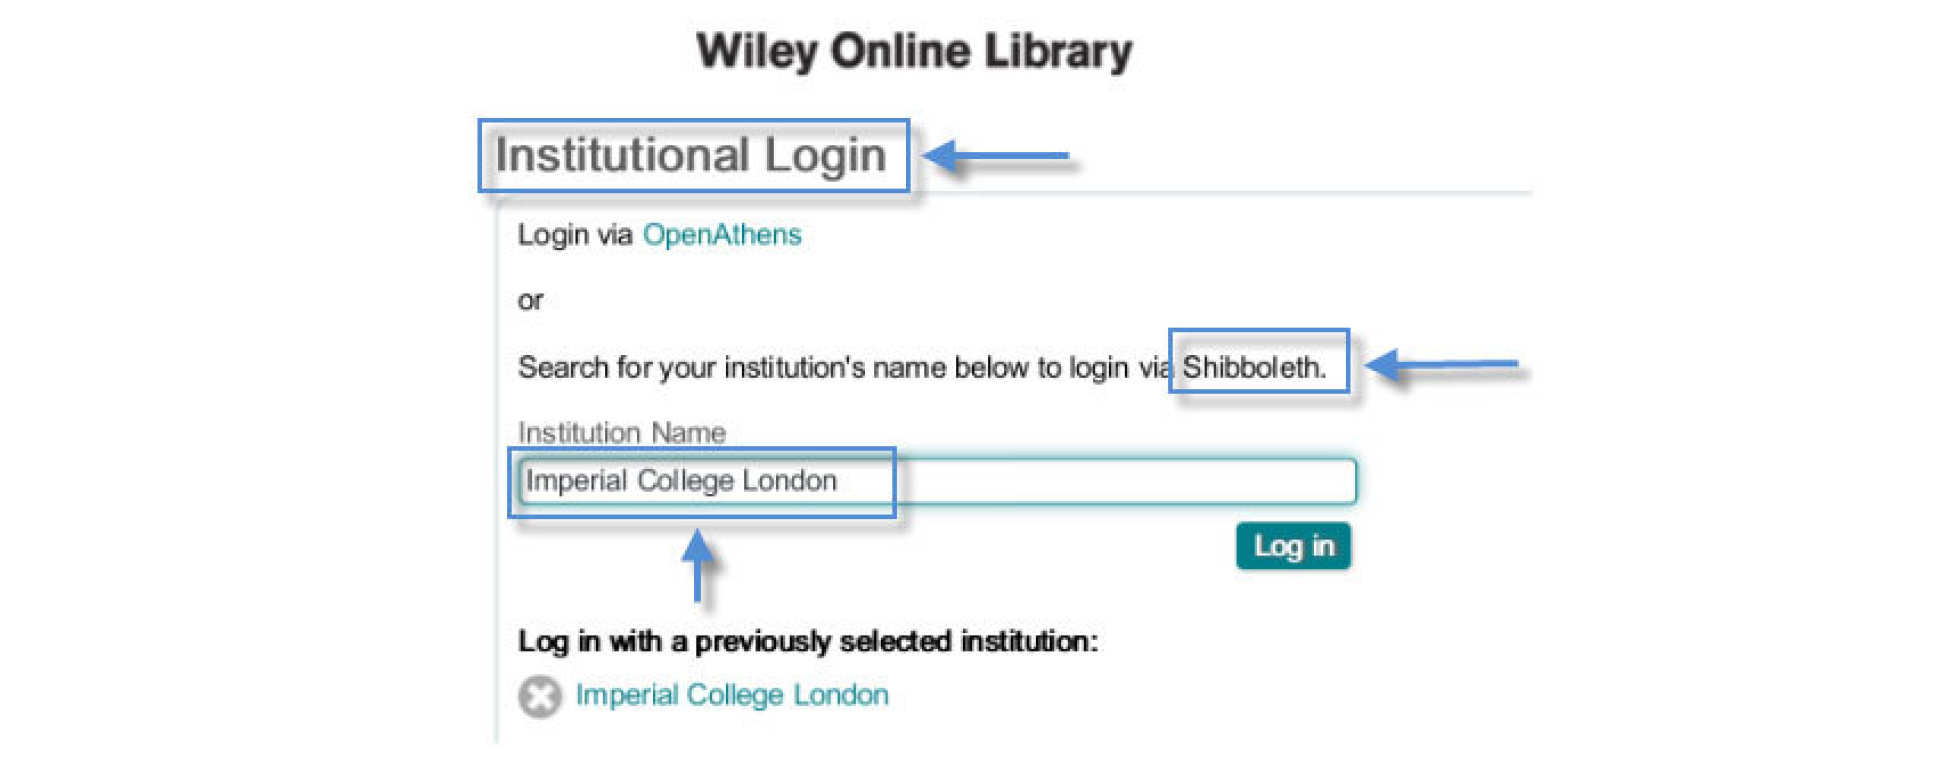 Screen image showing Institutional login